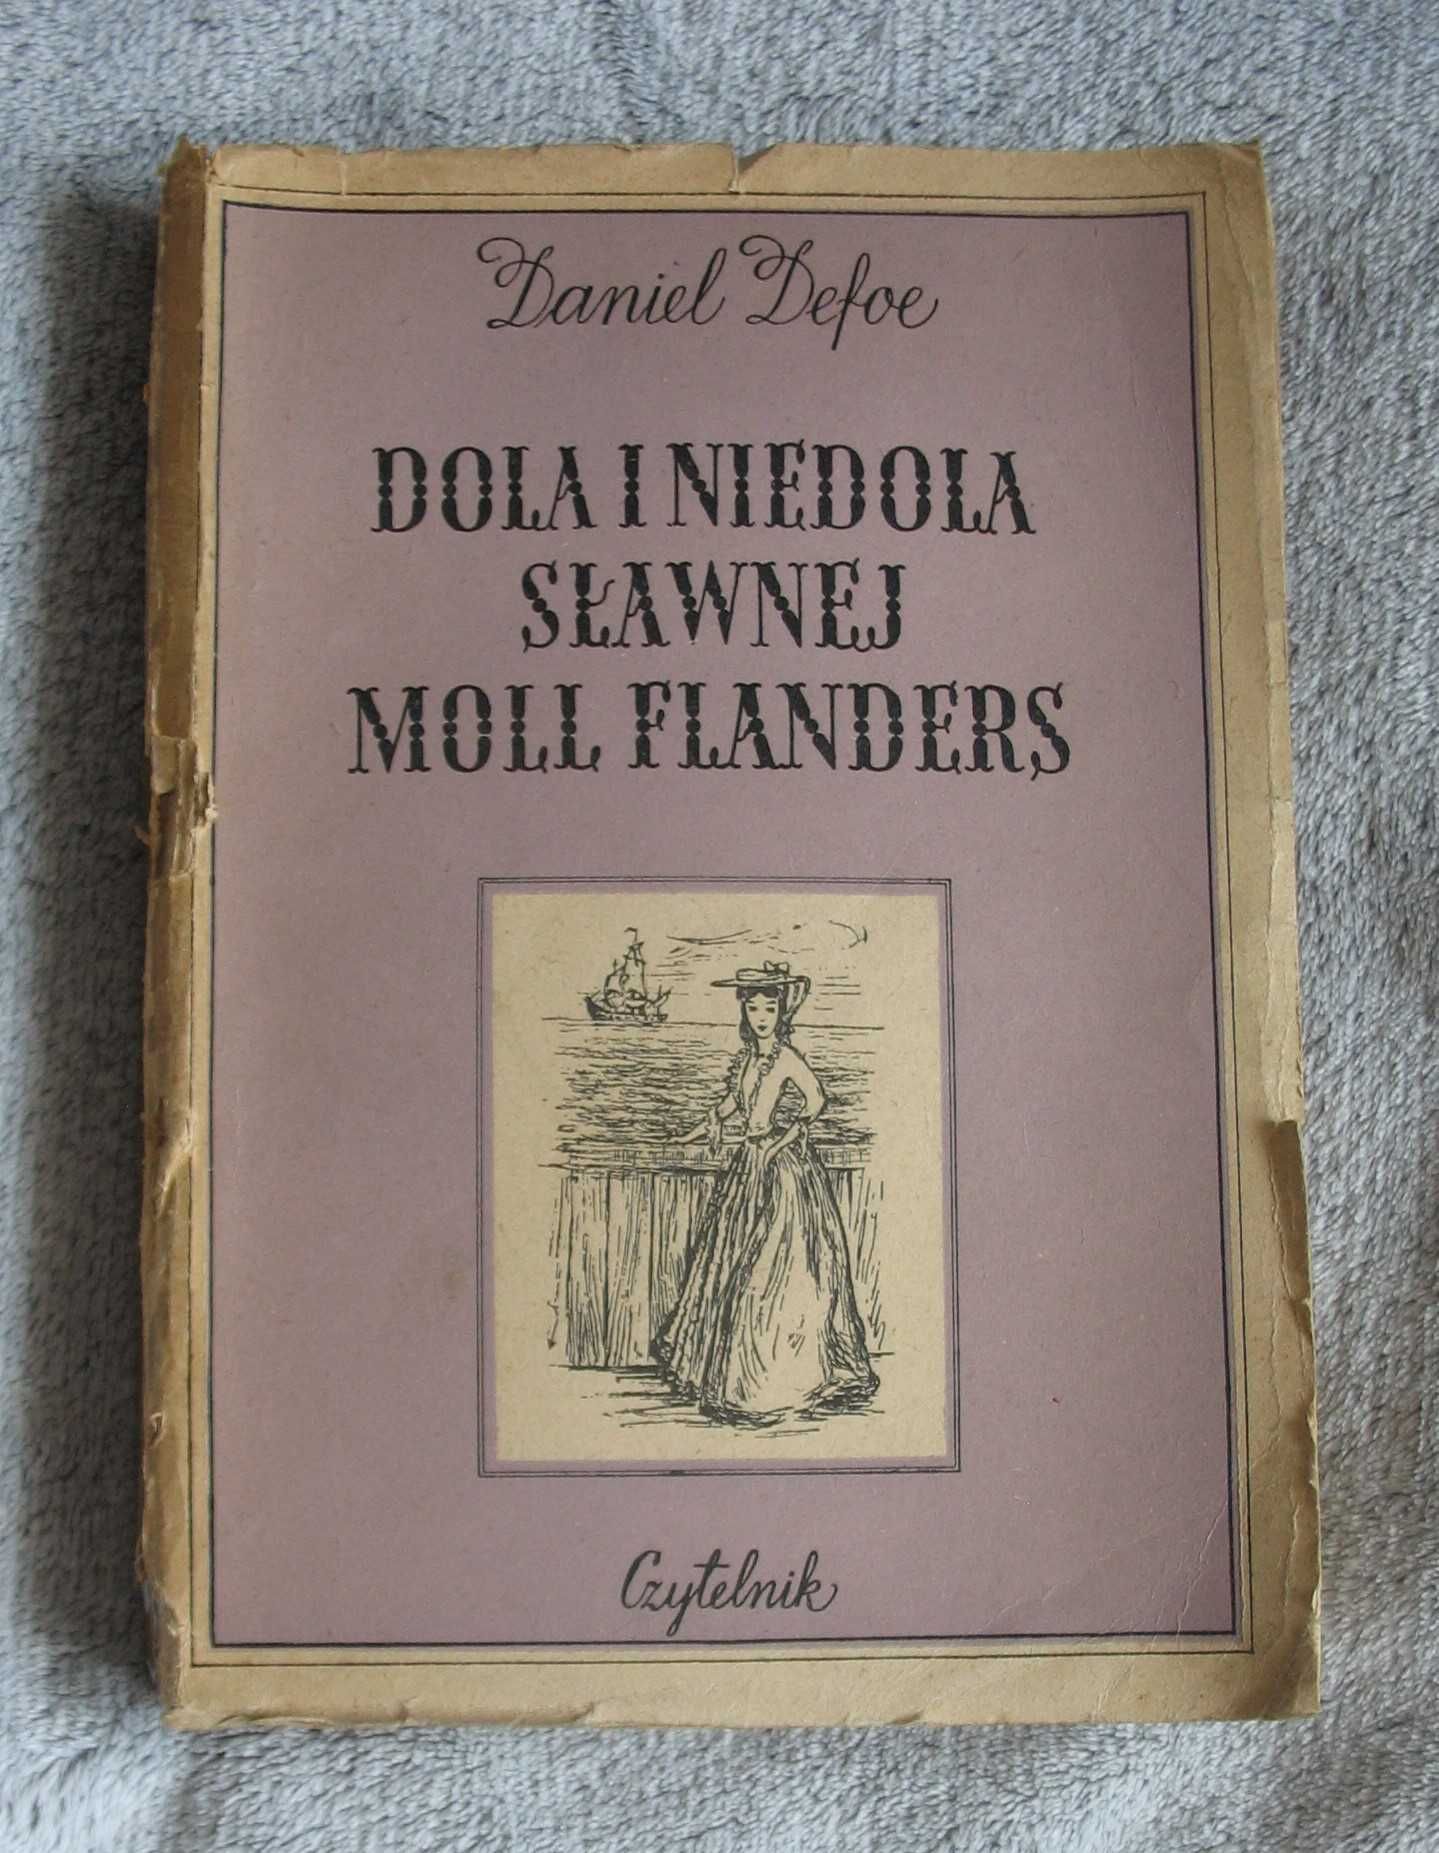 Dola i niedola sławnej Moll Flanders Daniel Defoe